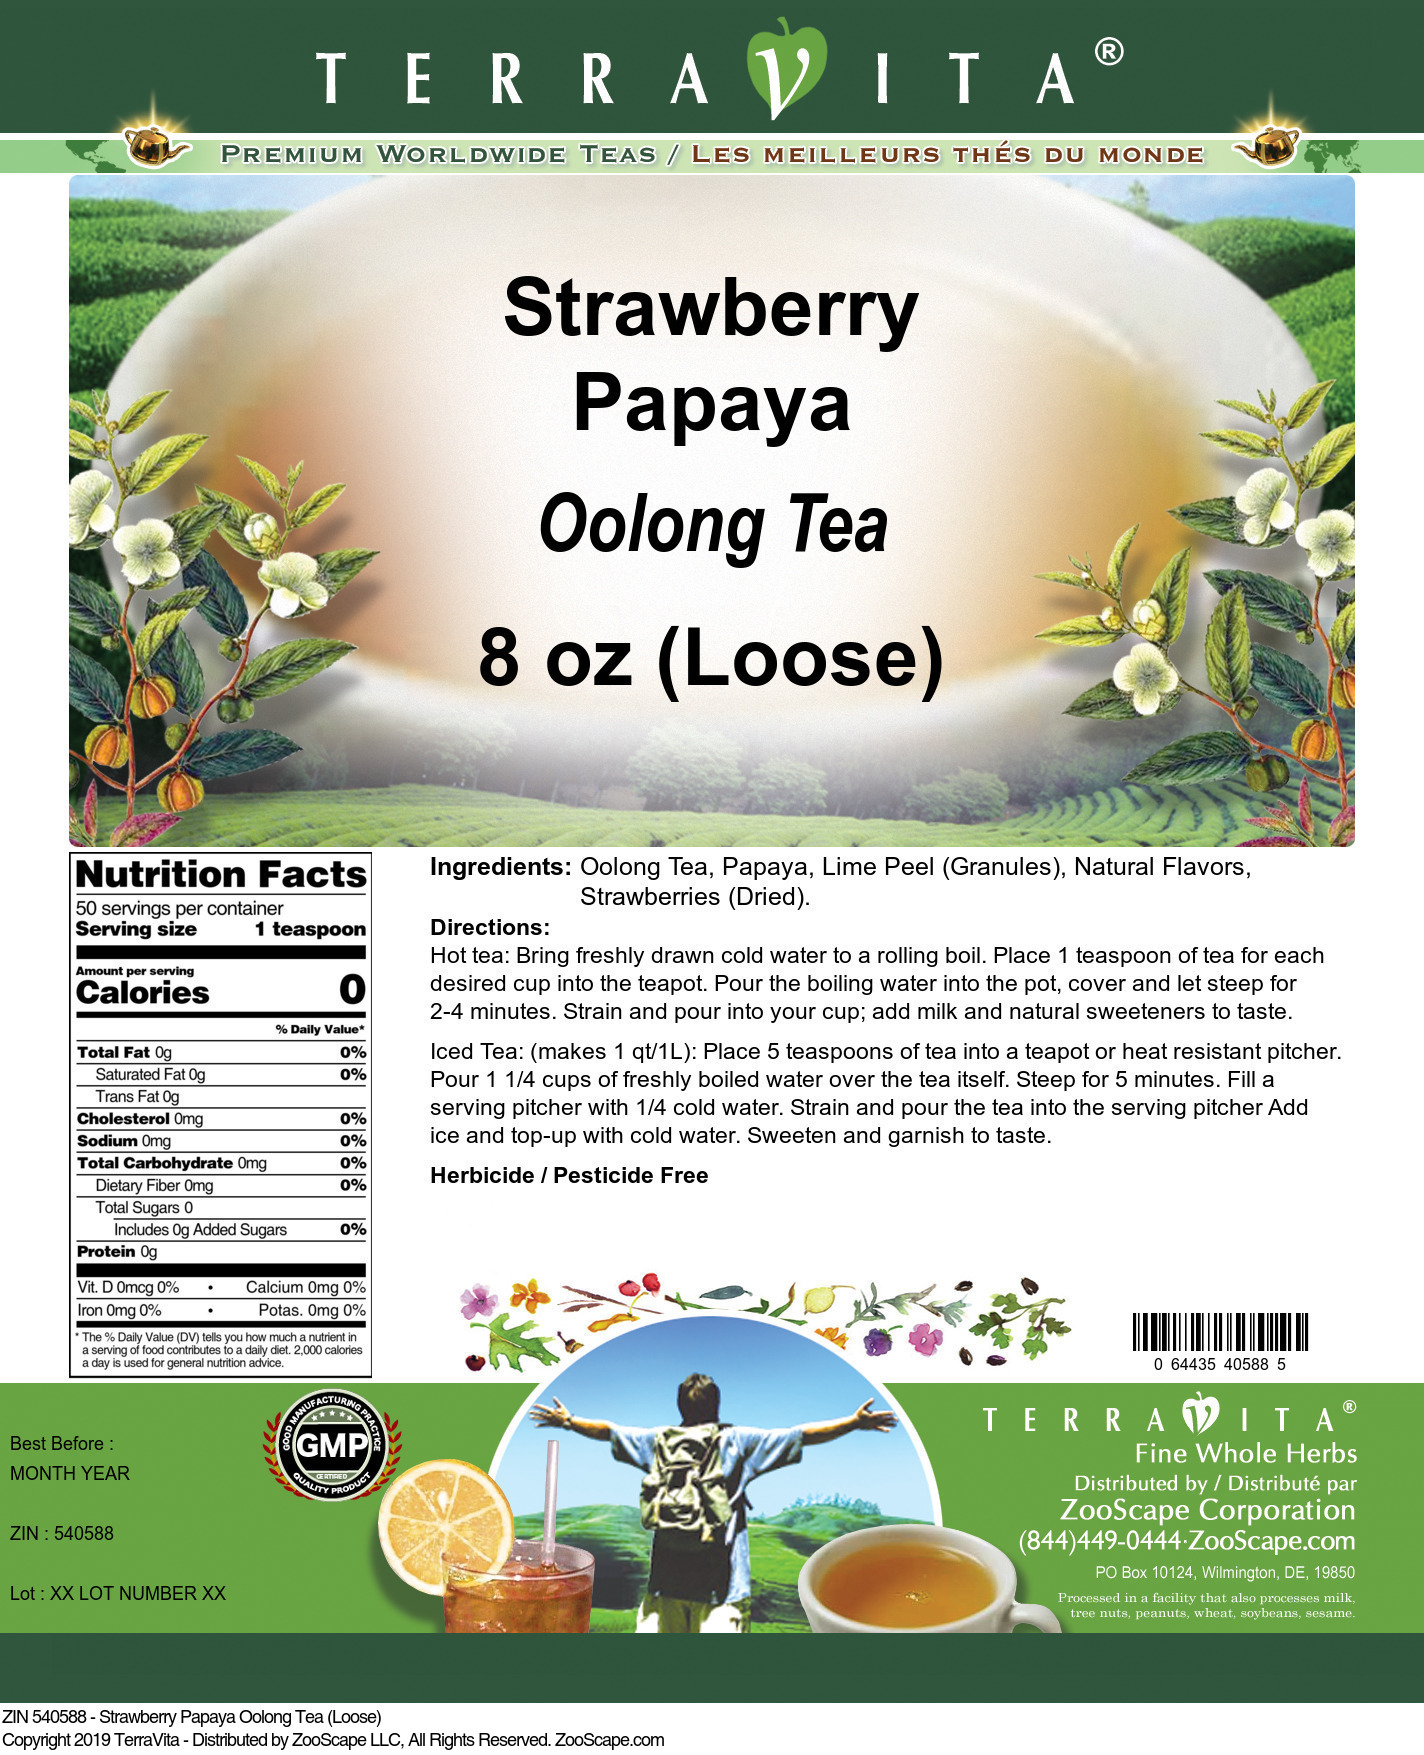 Strawberry Papaya Oolong Tea (Loose) - Label